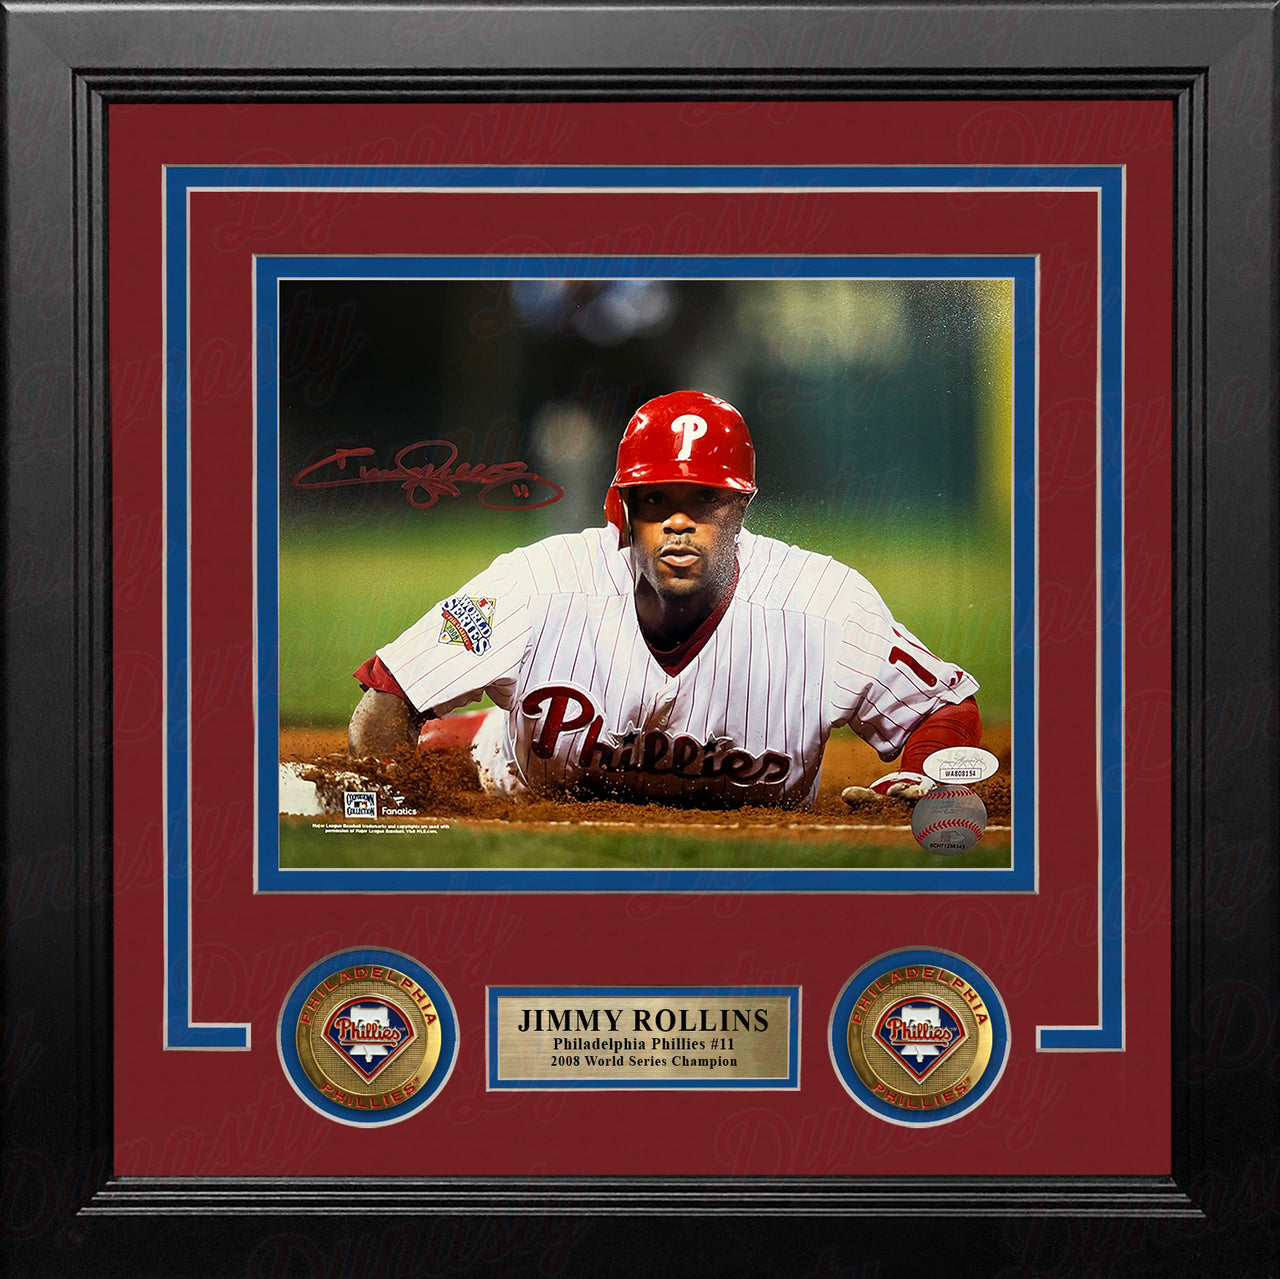 Jimmy Rollins 2008 World Series Slide Autographed Philadelphia Phillies 8x10 Framed Baseball Photo - Dynasty Sports & Framing 